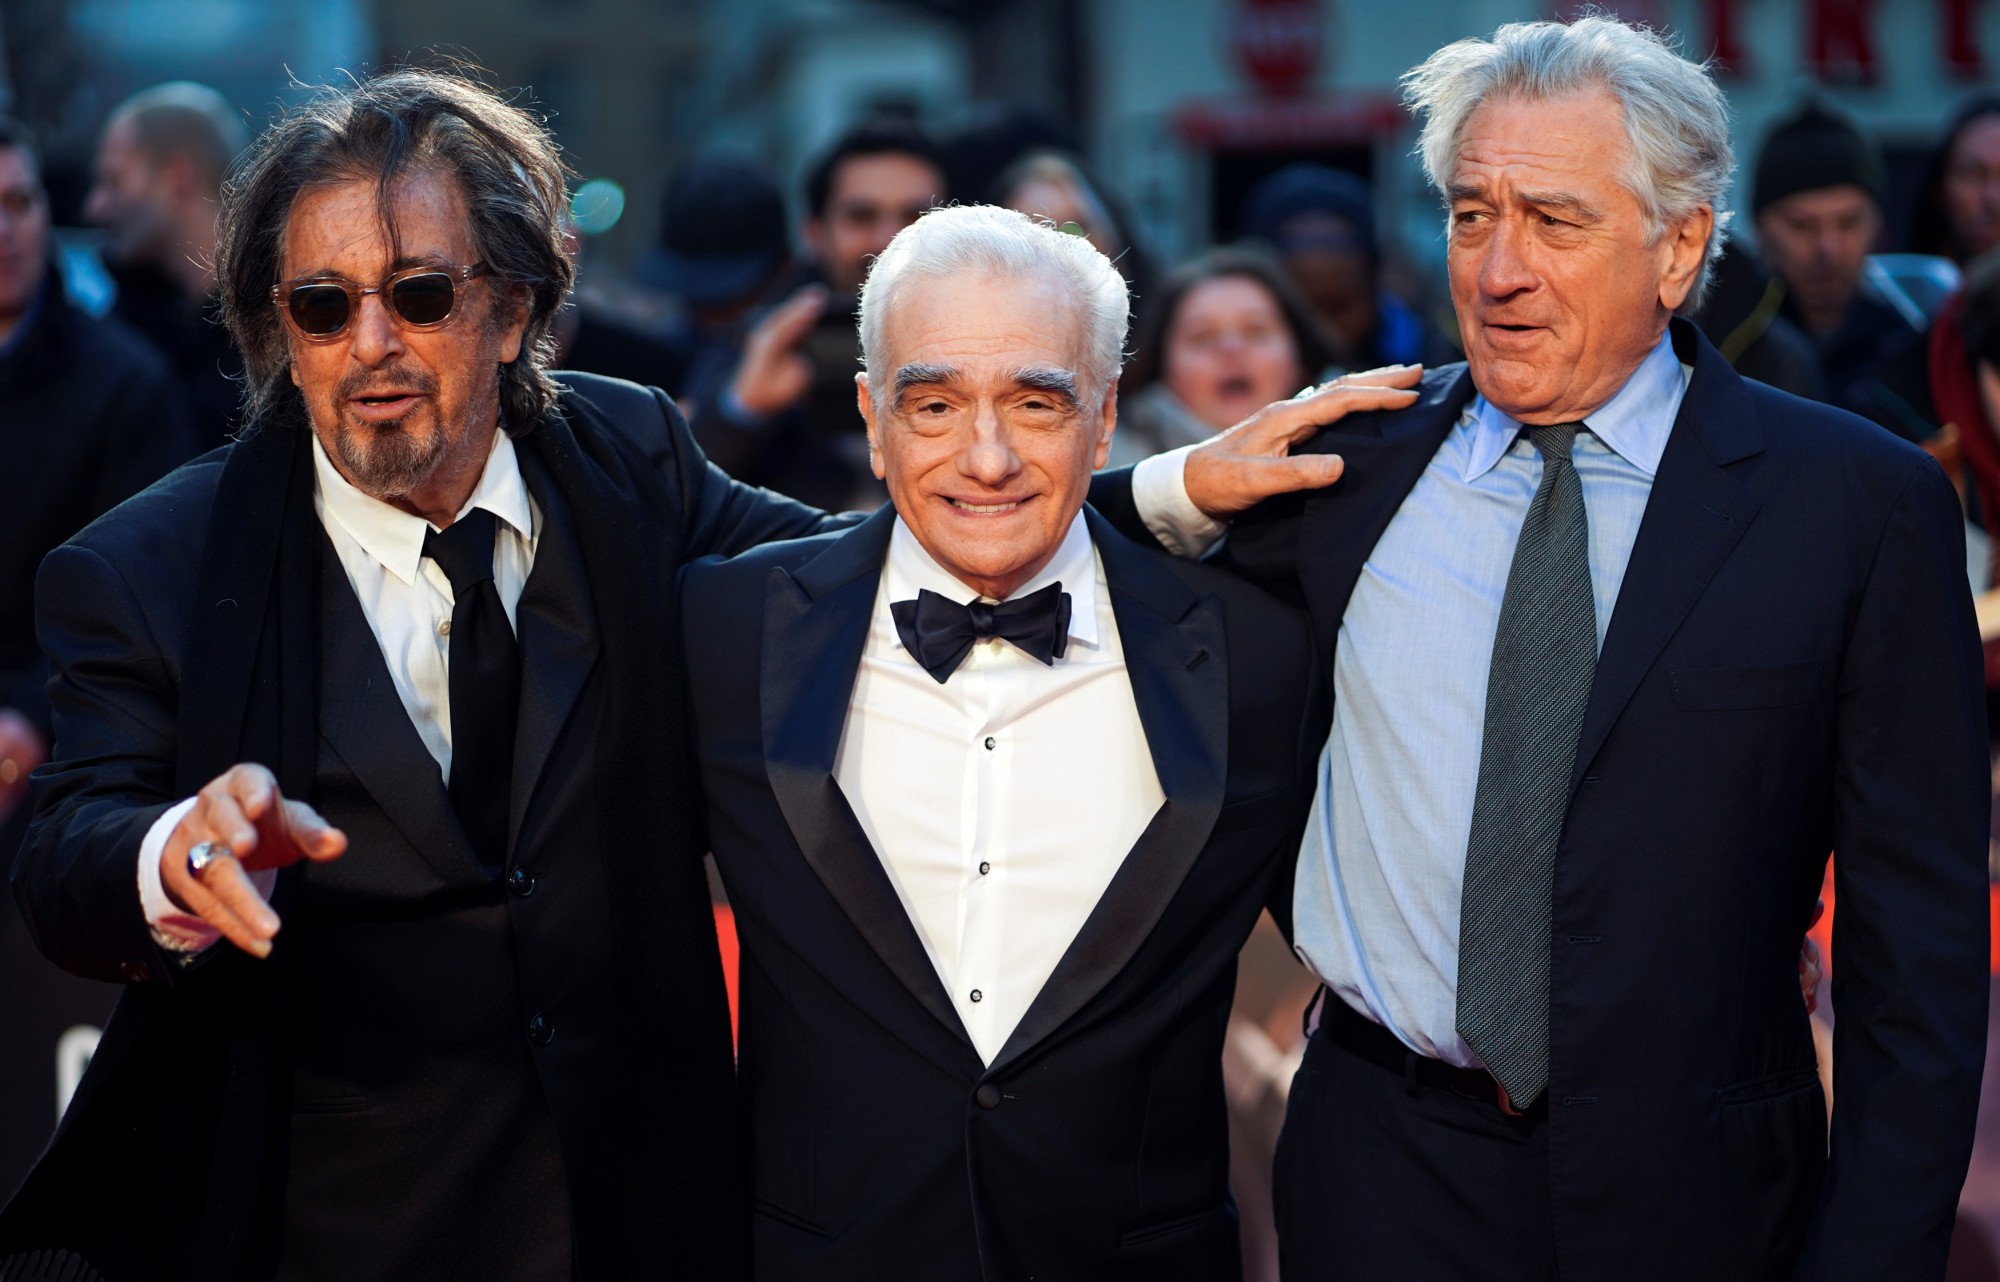 martin Scorsese Says He Wanted To Enrich Past Robert De Niro Work With The Irishman The Japan Times